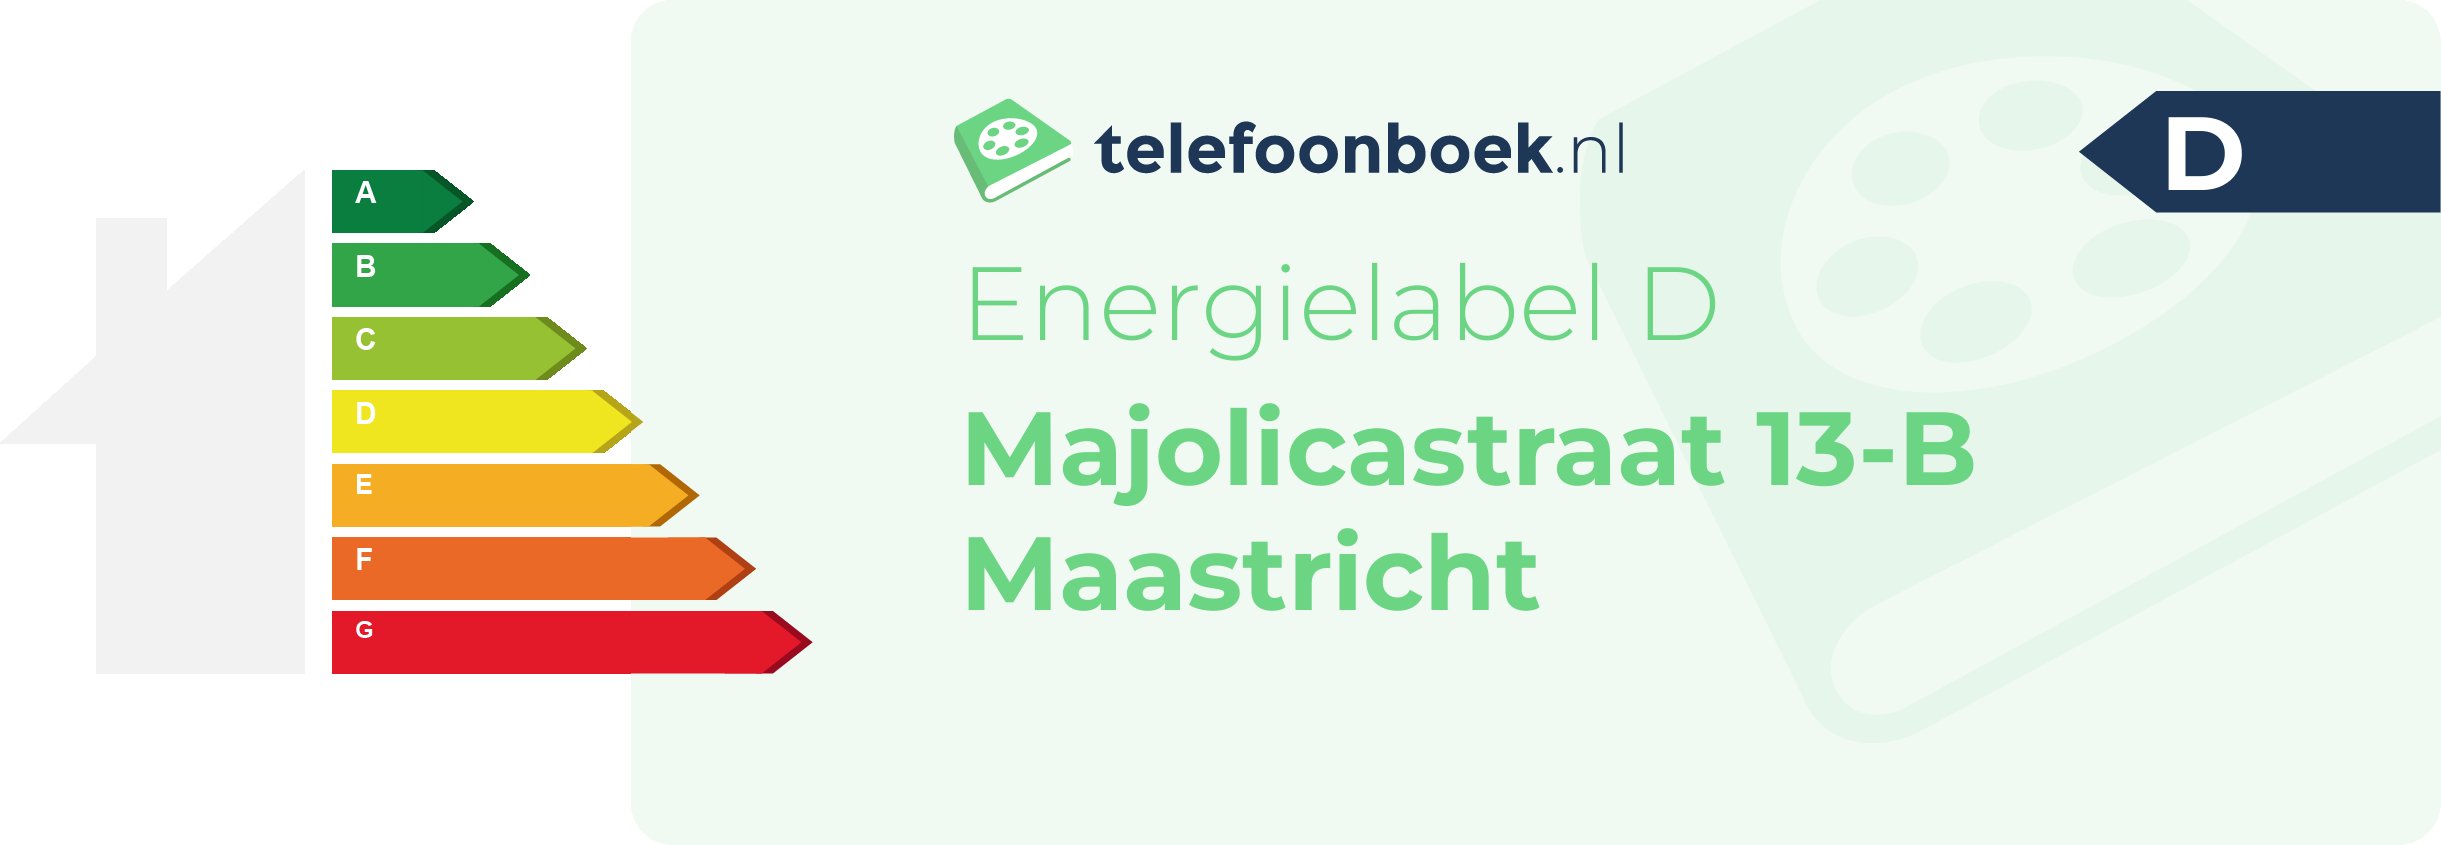 Energielabel Majolicastraat 13-B Maastricht